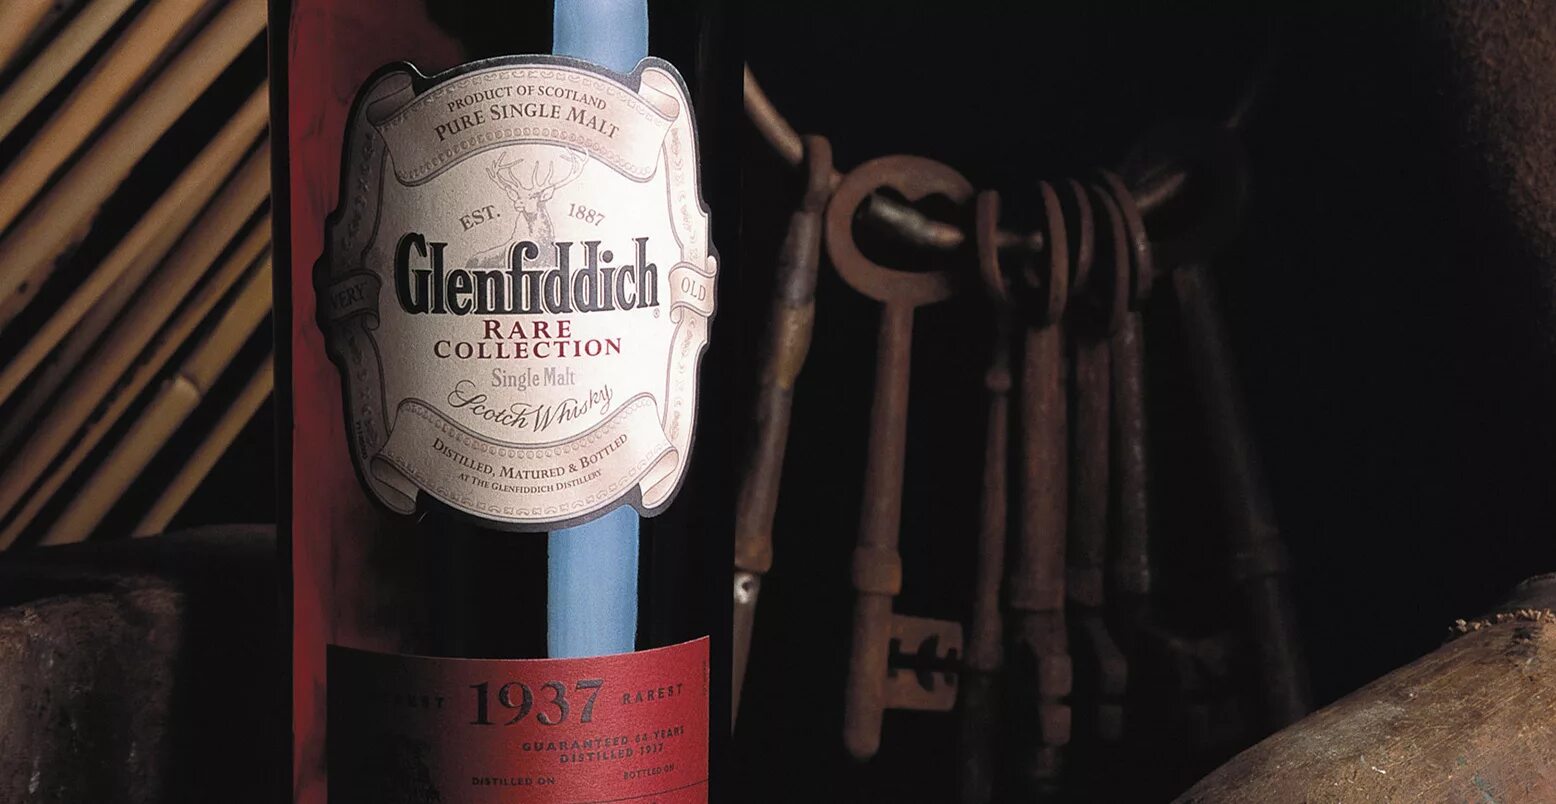 Rare collection. Виски 1937. Самая Старая бутылка виски в мире цена. Whiskies expenisve.